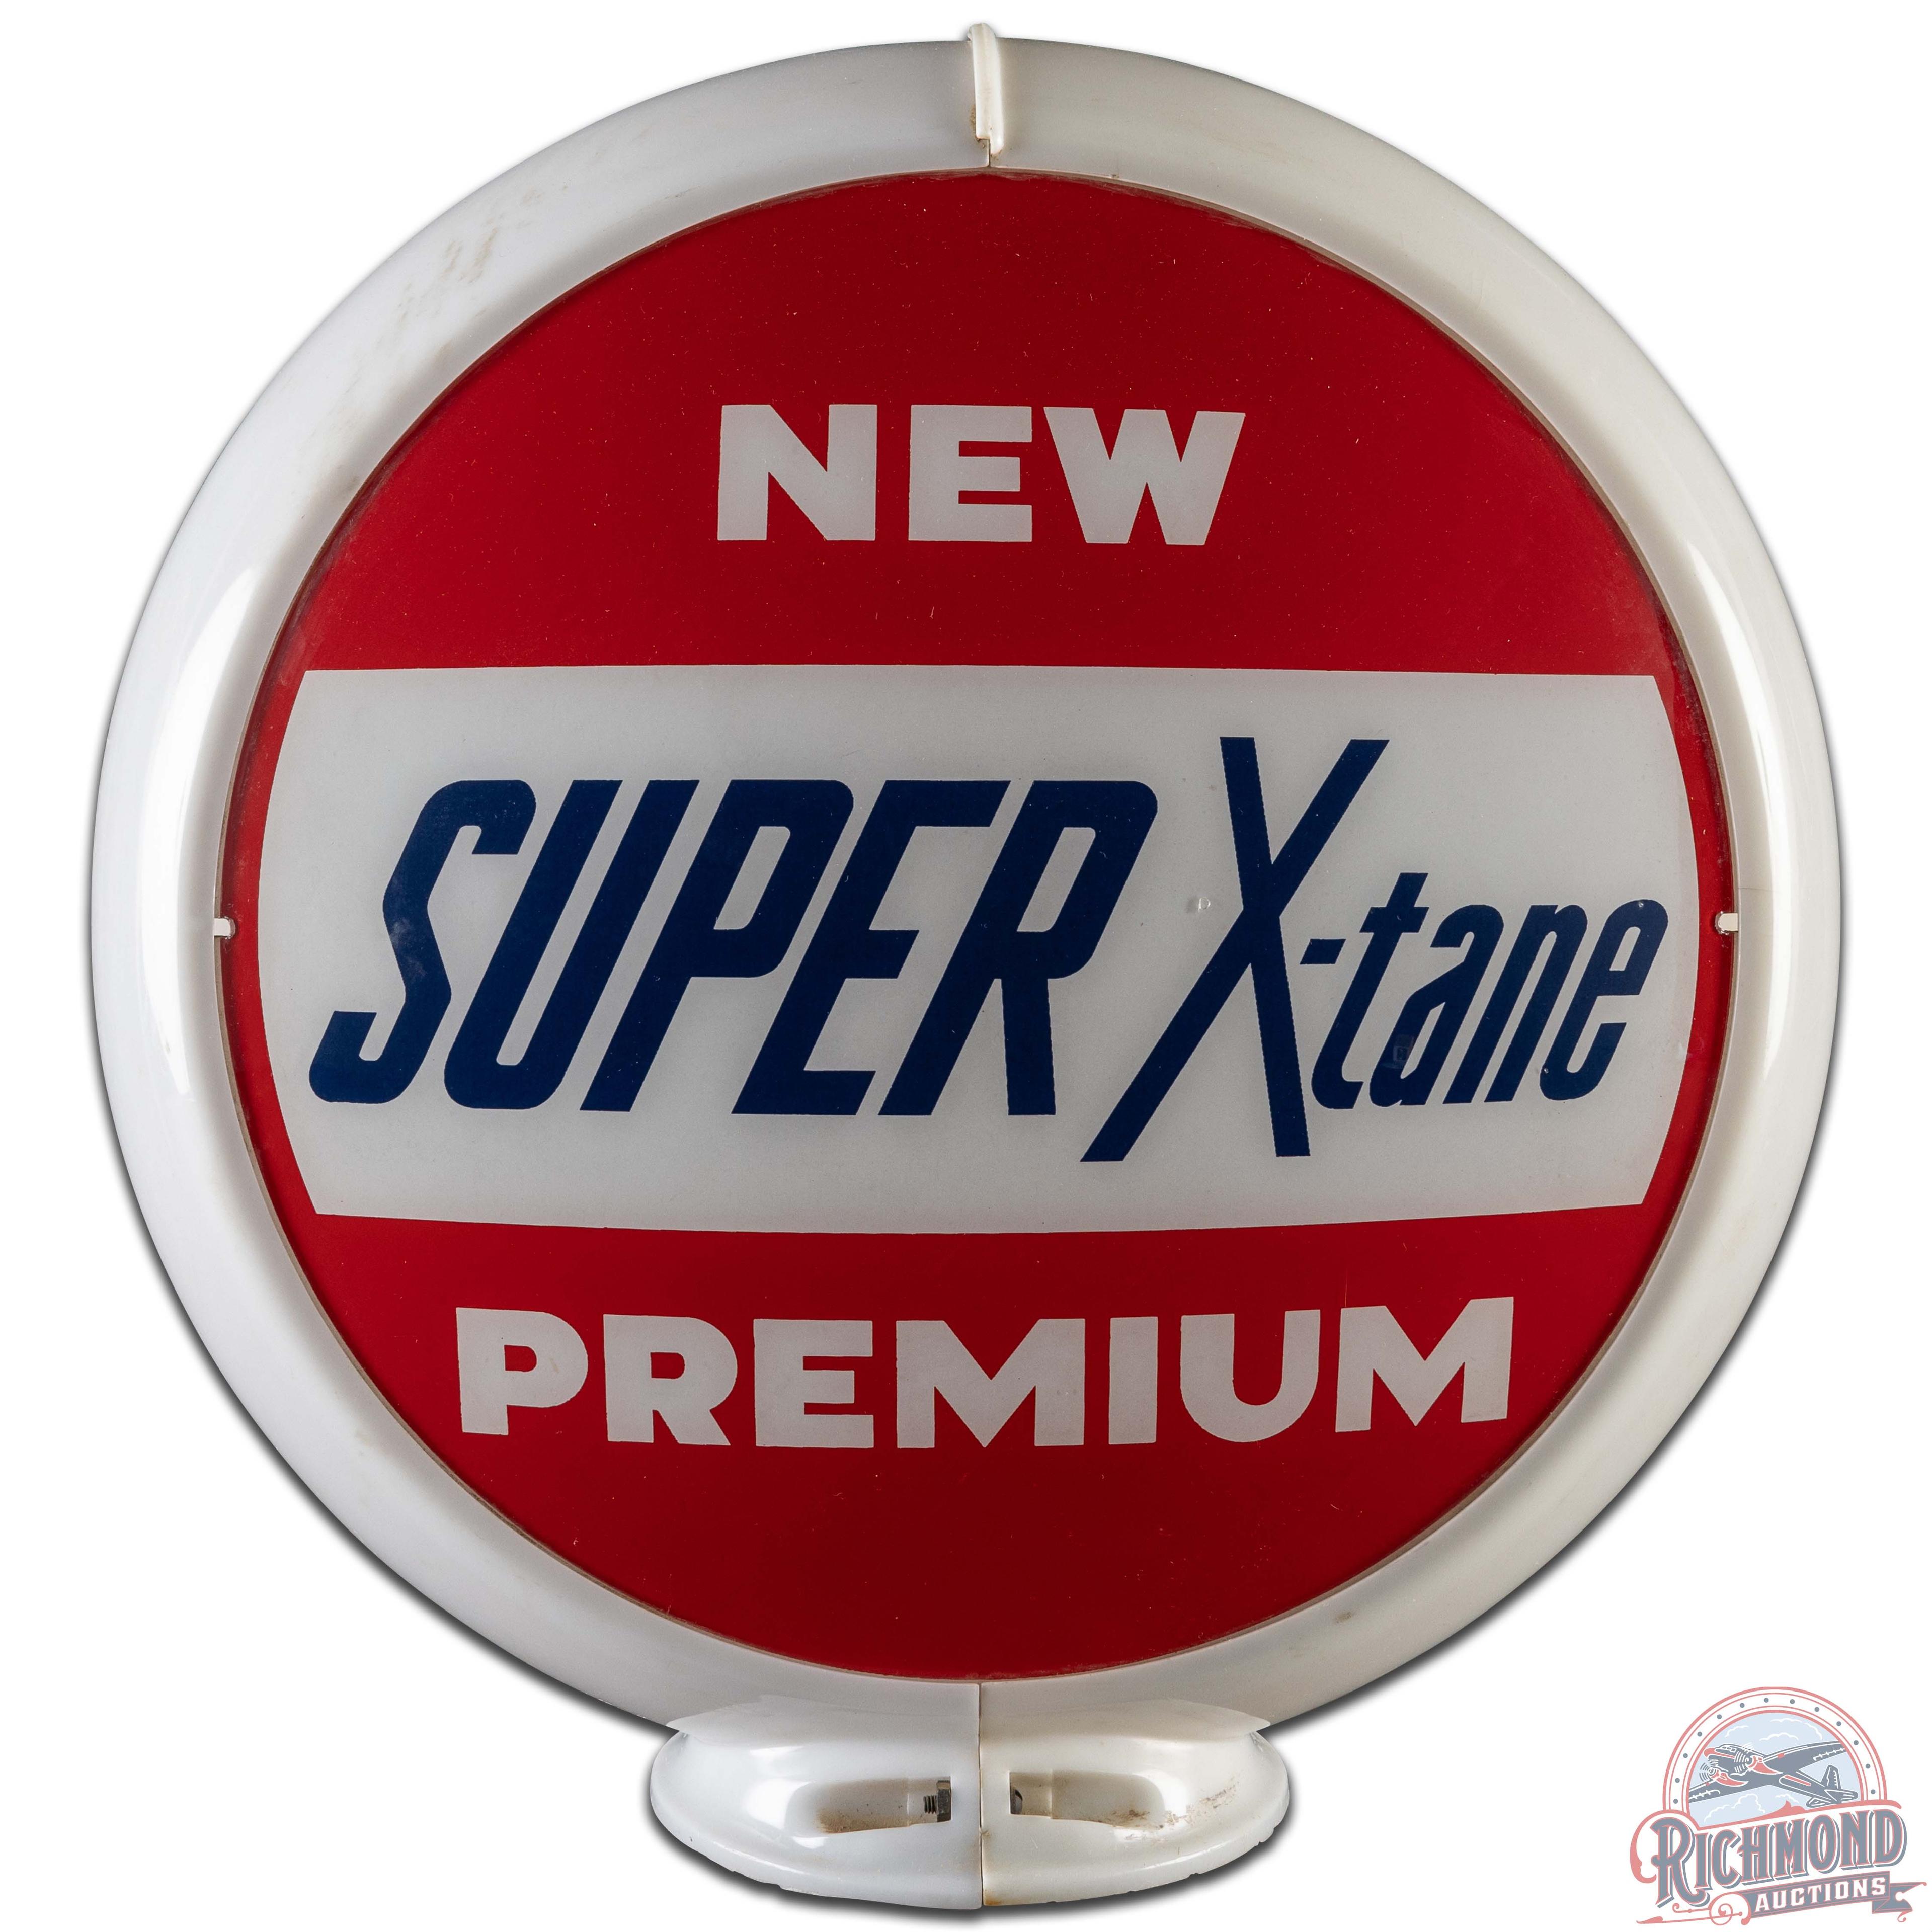 Leonard New Super X-Tane Premium 13.5" Gas Pump Globe Complete